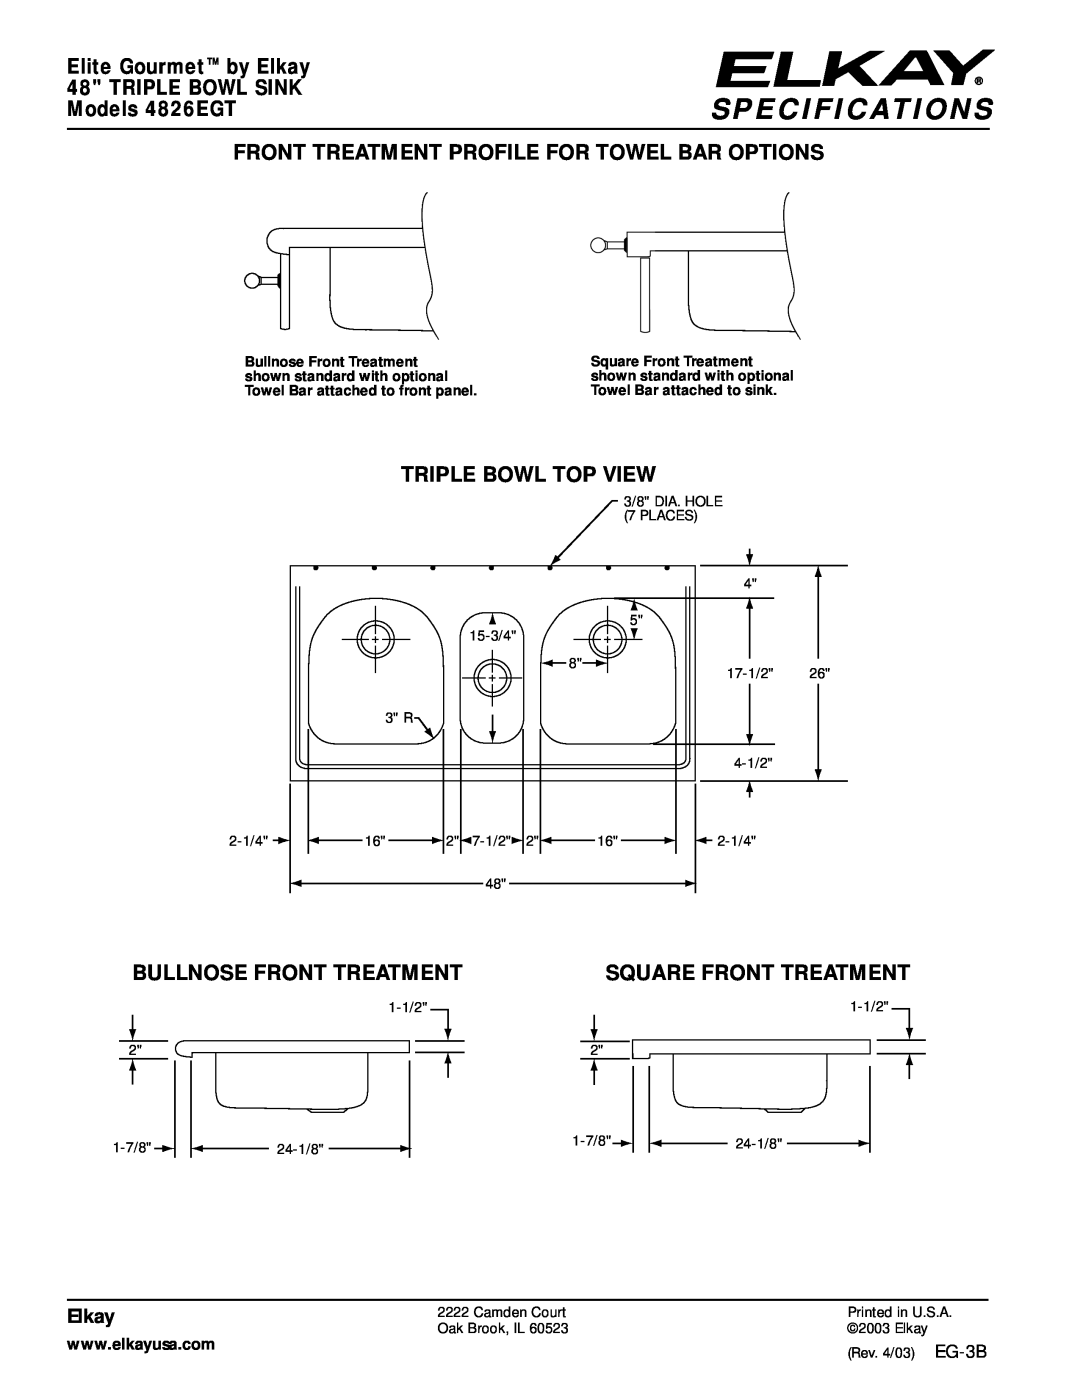 Elkay 4826EGT Triple Bowl Sink, Front Treatment Profile For Towel Bar Options, Triple Bowl Top View, Specifications, Elkay 